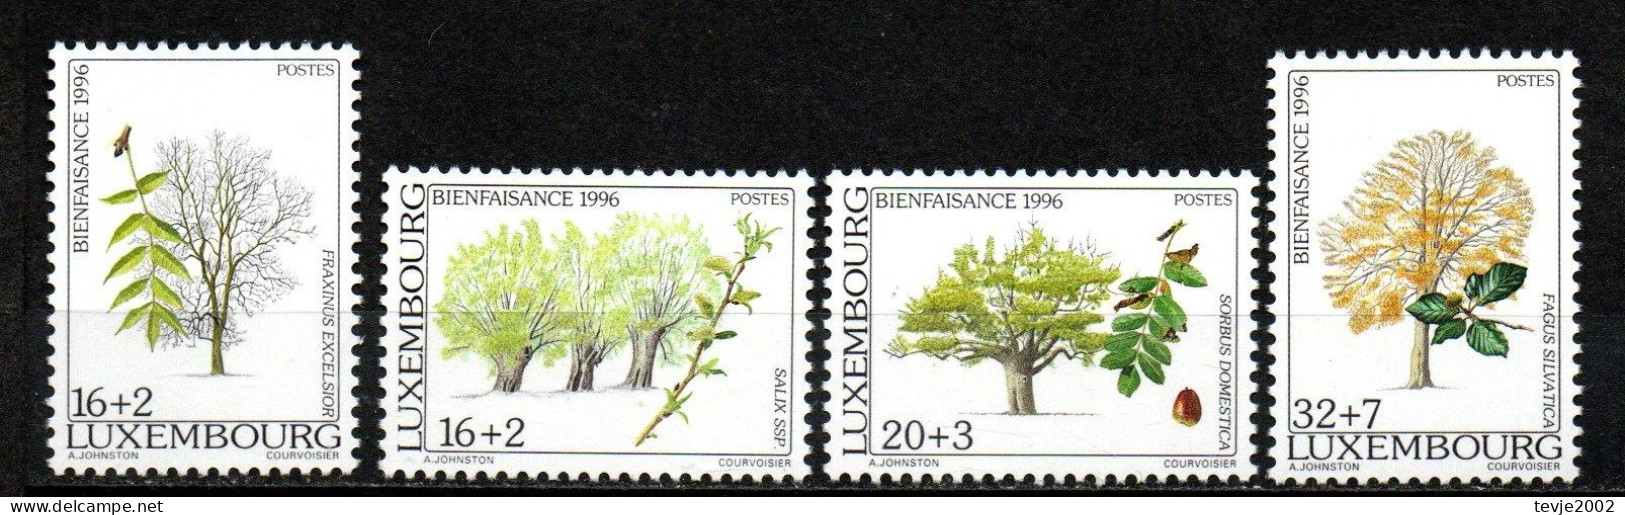 Luxemburg 1996 - Mi.Nr. 1404 - 1407 - Postfrisch MNH - Bäume Trees - Bäume